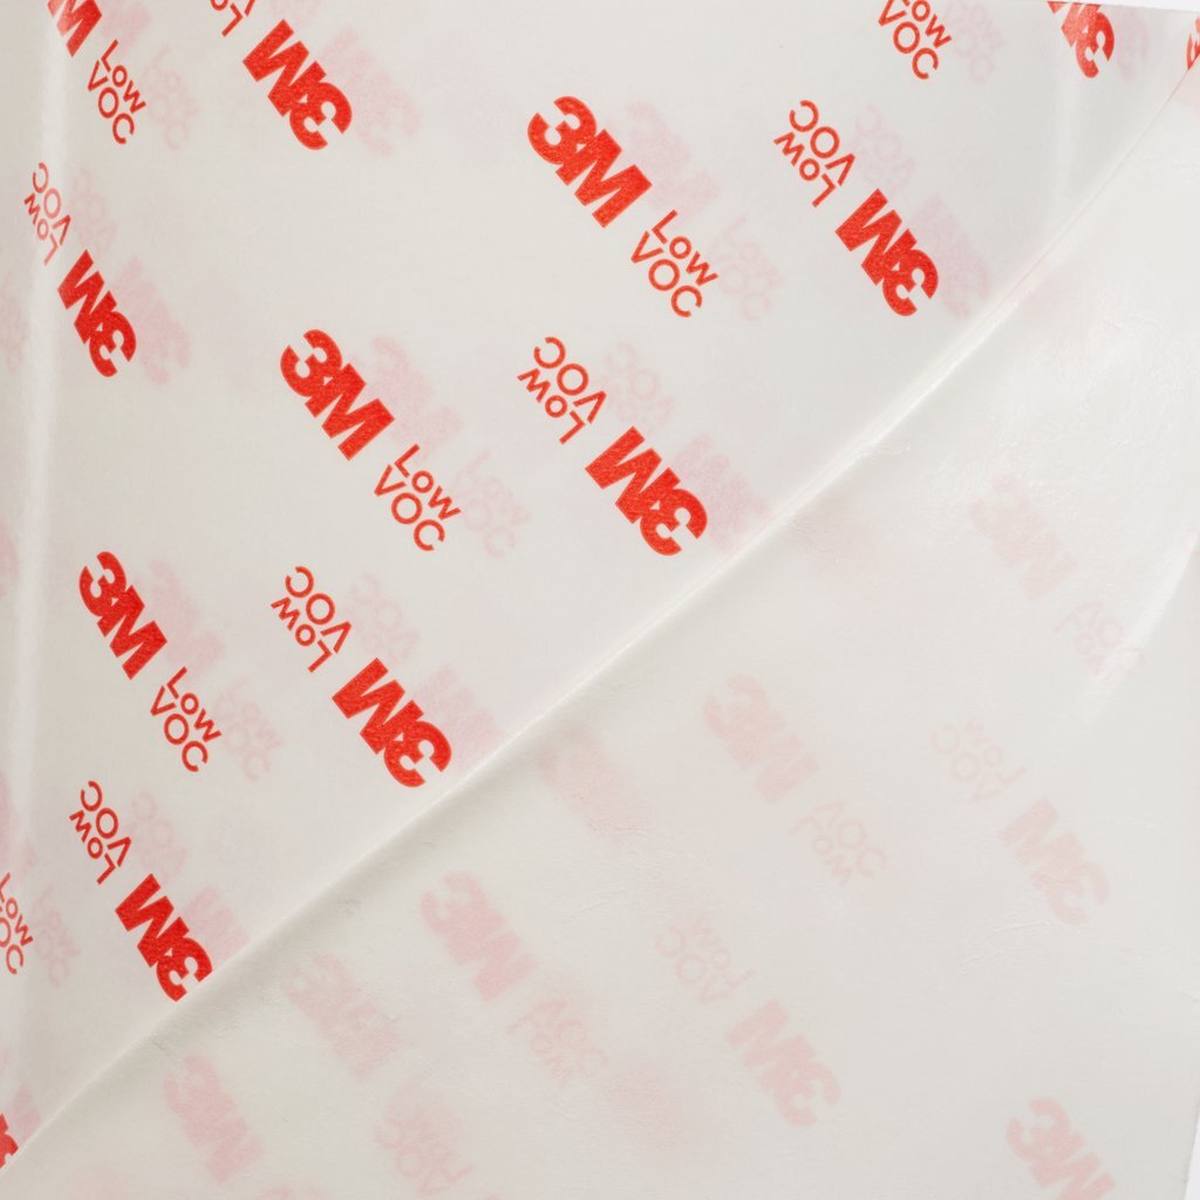 3M Dubbelzijdig plakband met vliespapier als rug 99015LVC, wit, 50 mm x 50 m, 0,15 mm